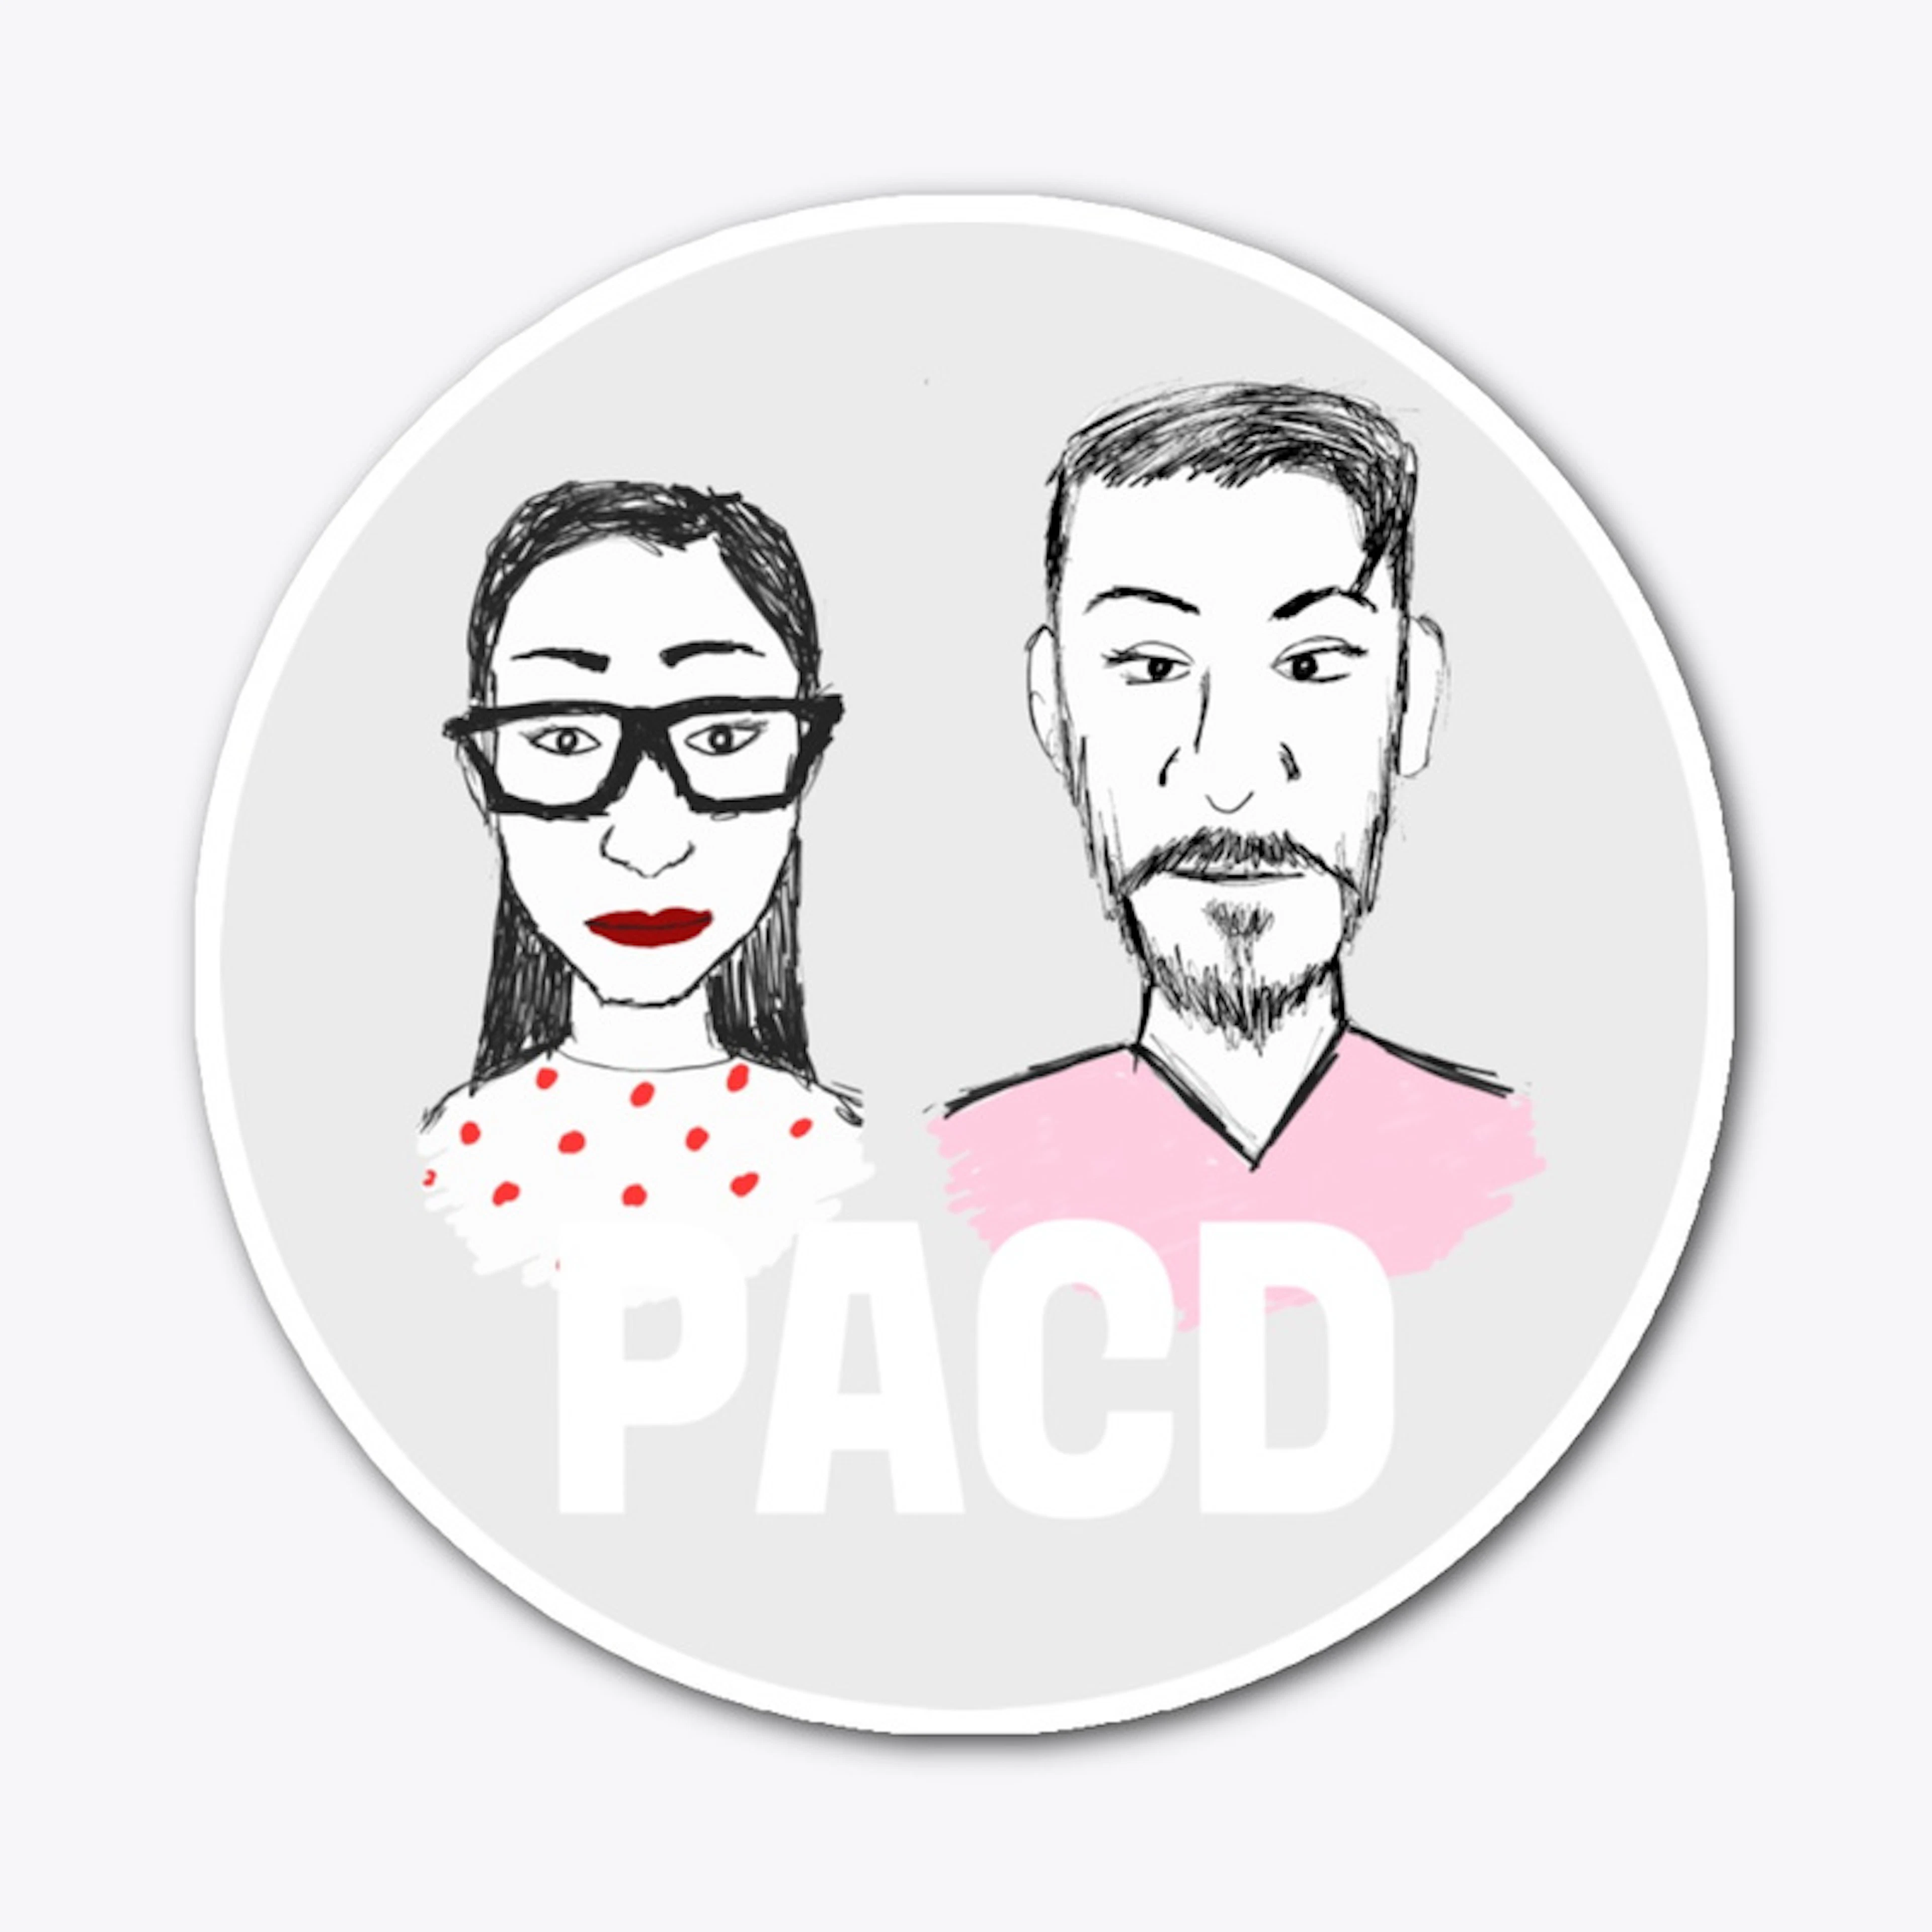 PACD Logo